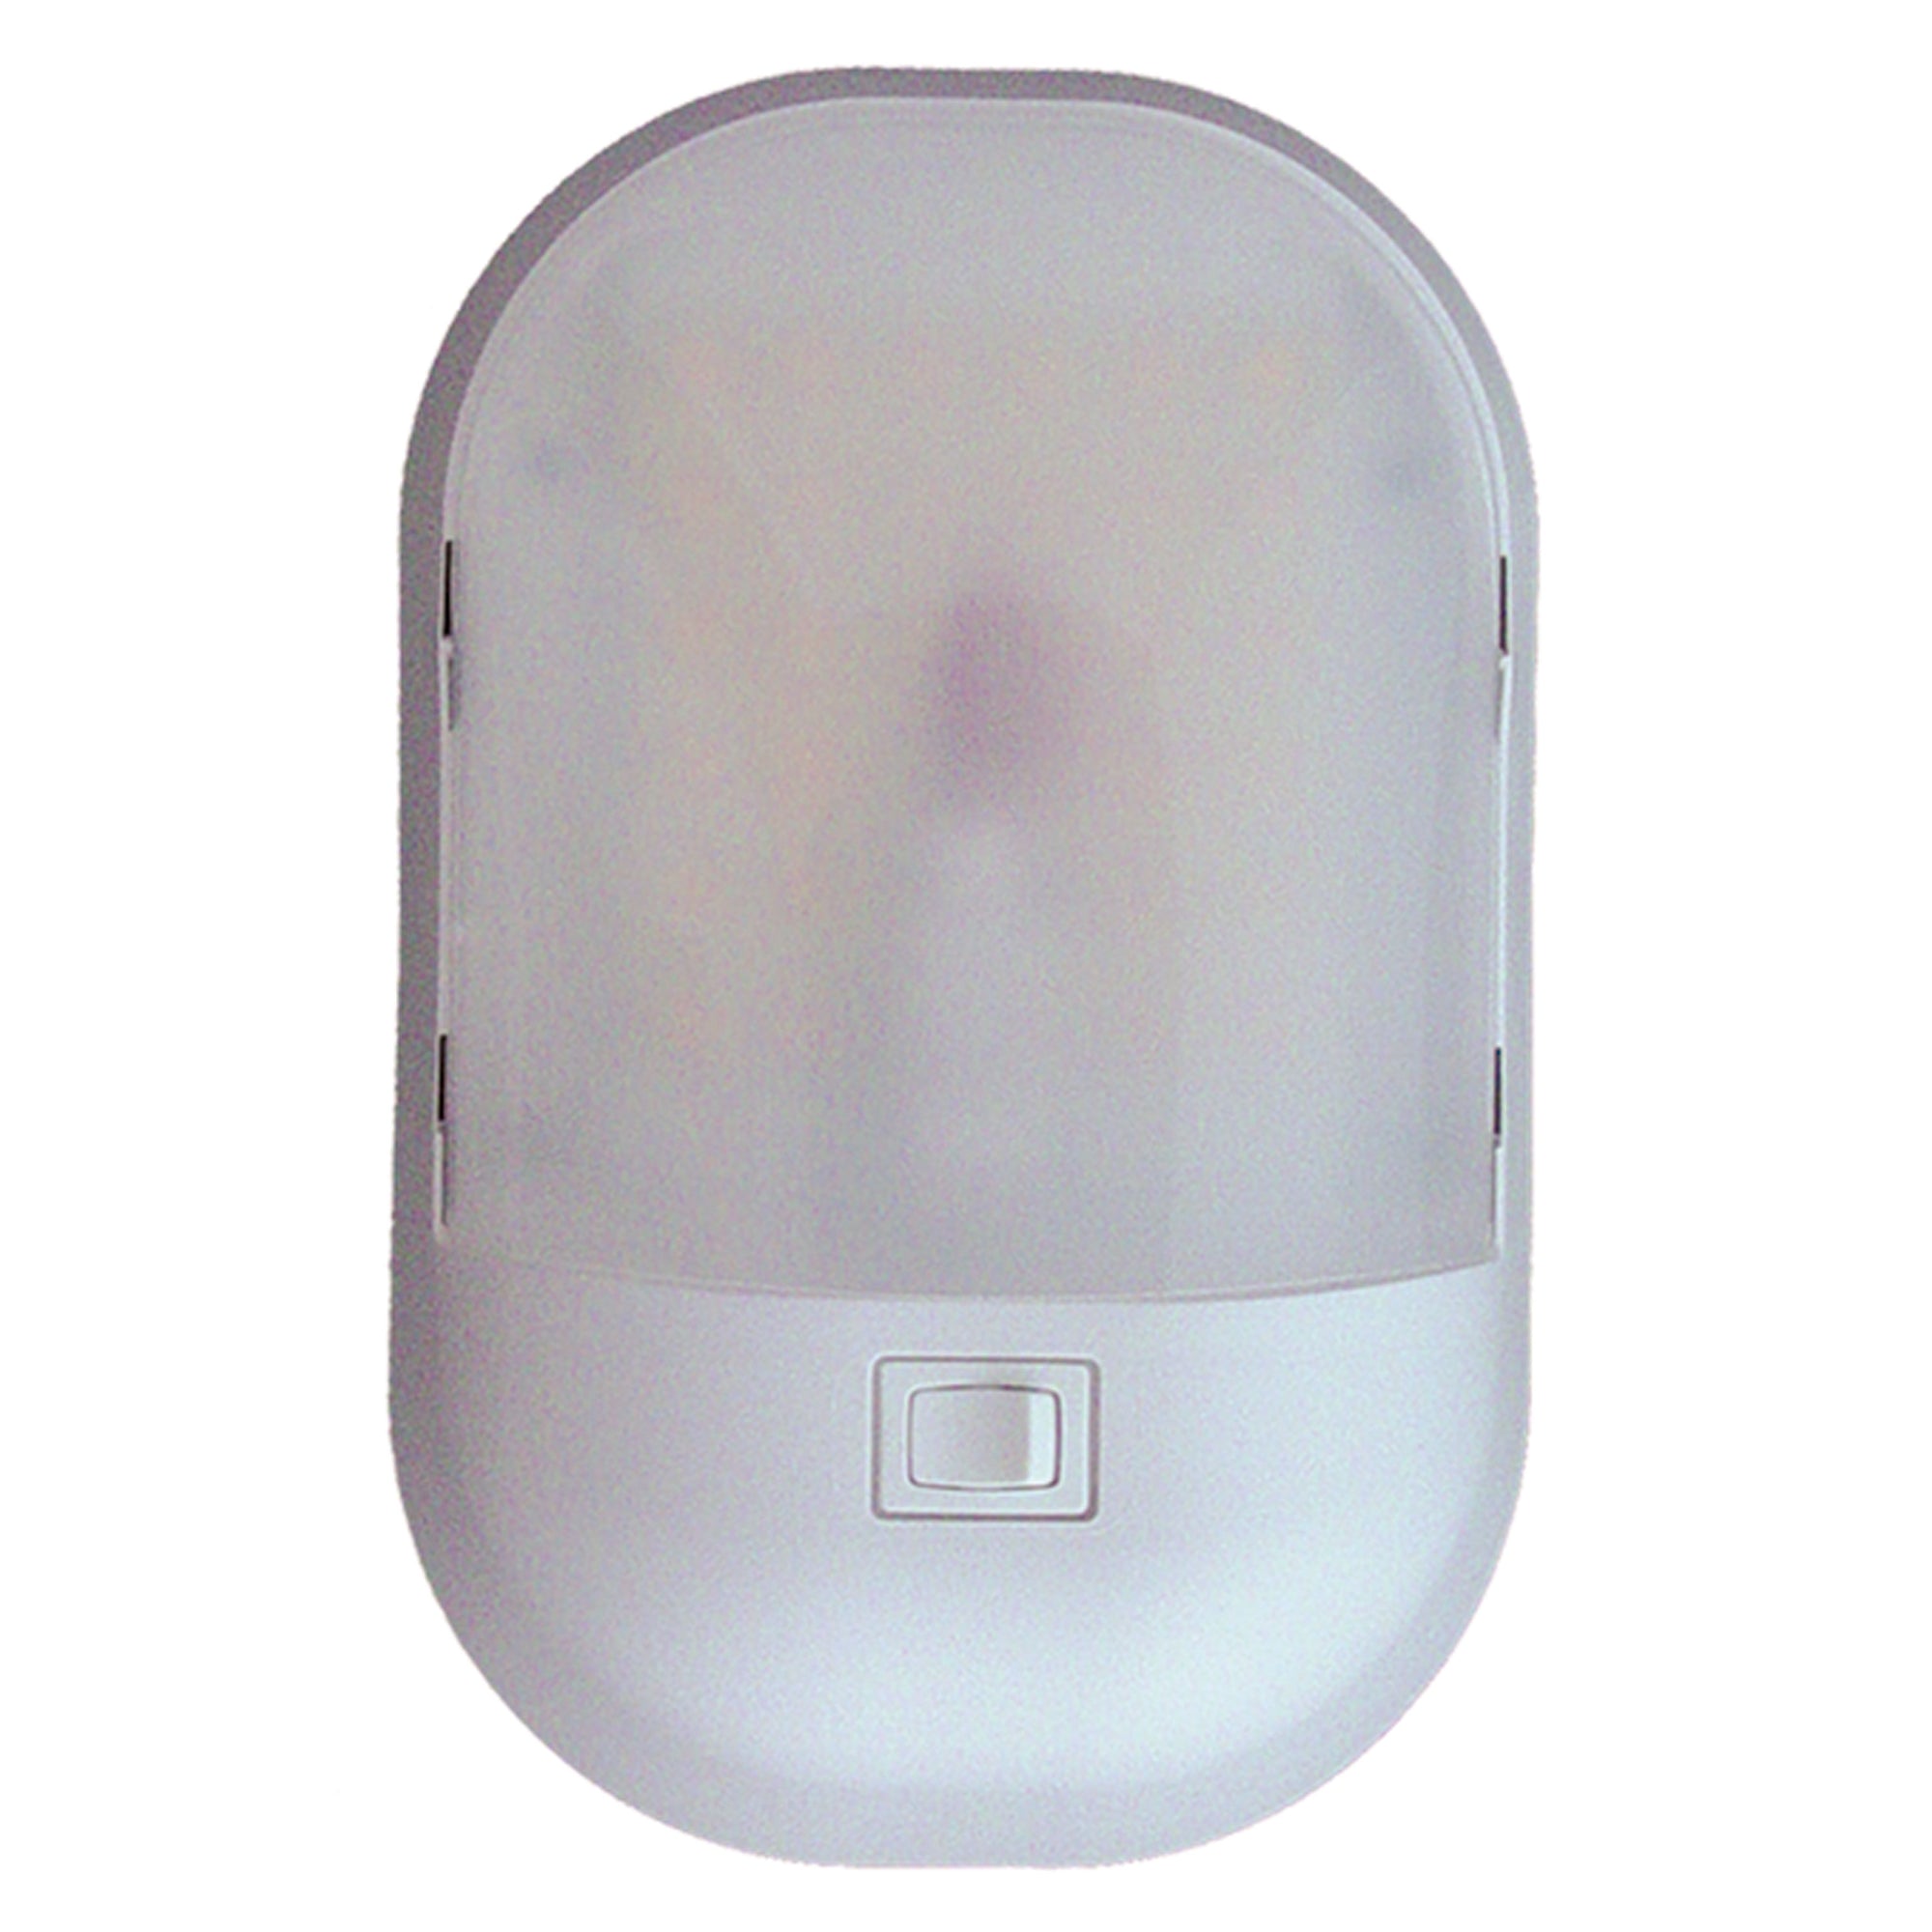 Fasteners Unlimited K-9010 Omega Interior Dome Light With Warm Light LEDs - Single LED Light